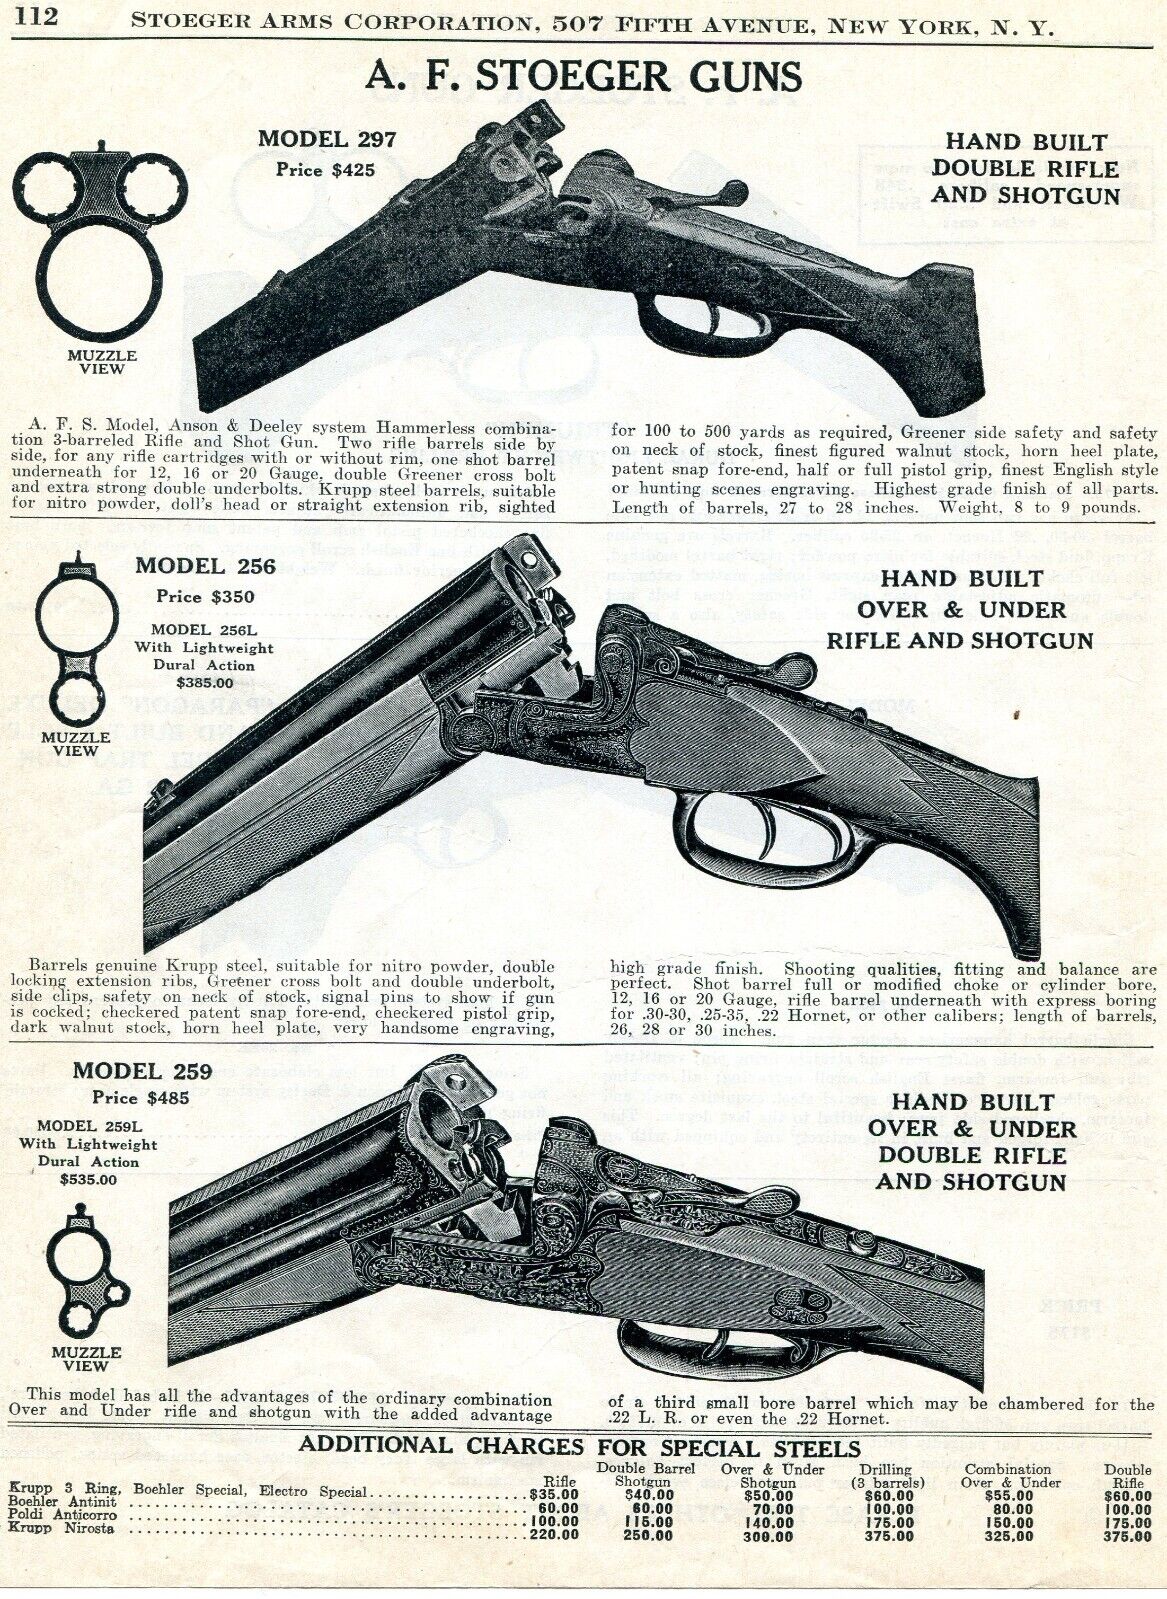 1939 Print Ad of AFS Stoeger Model 297 256 259 Rifle Shotgun Combo